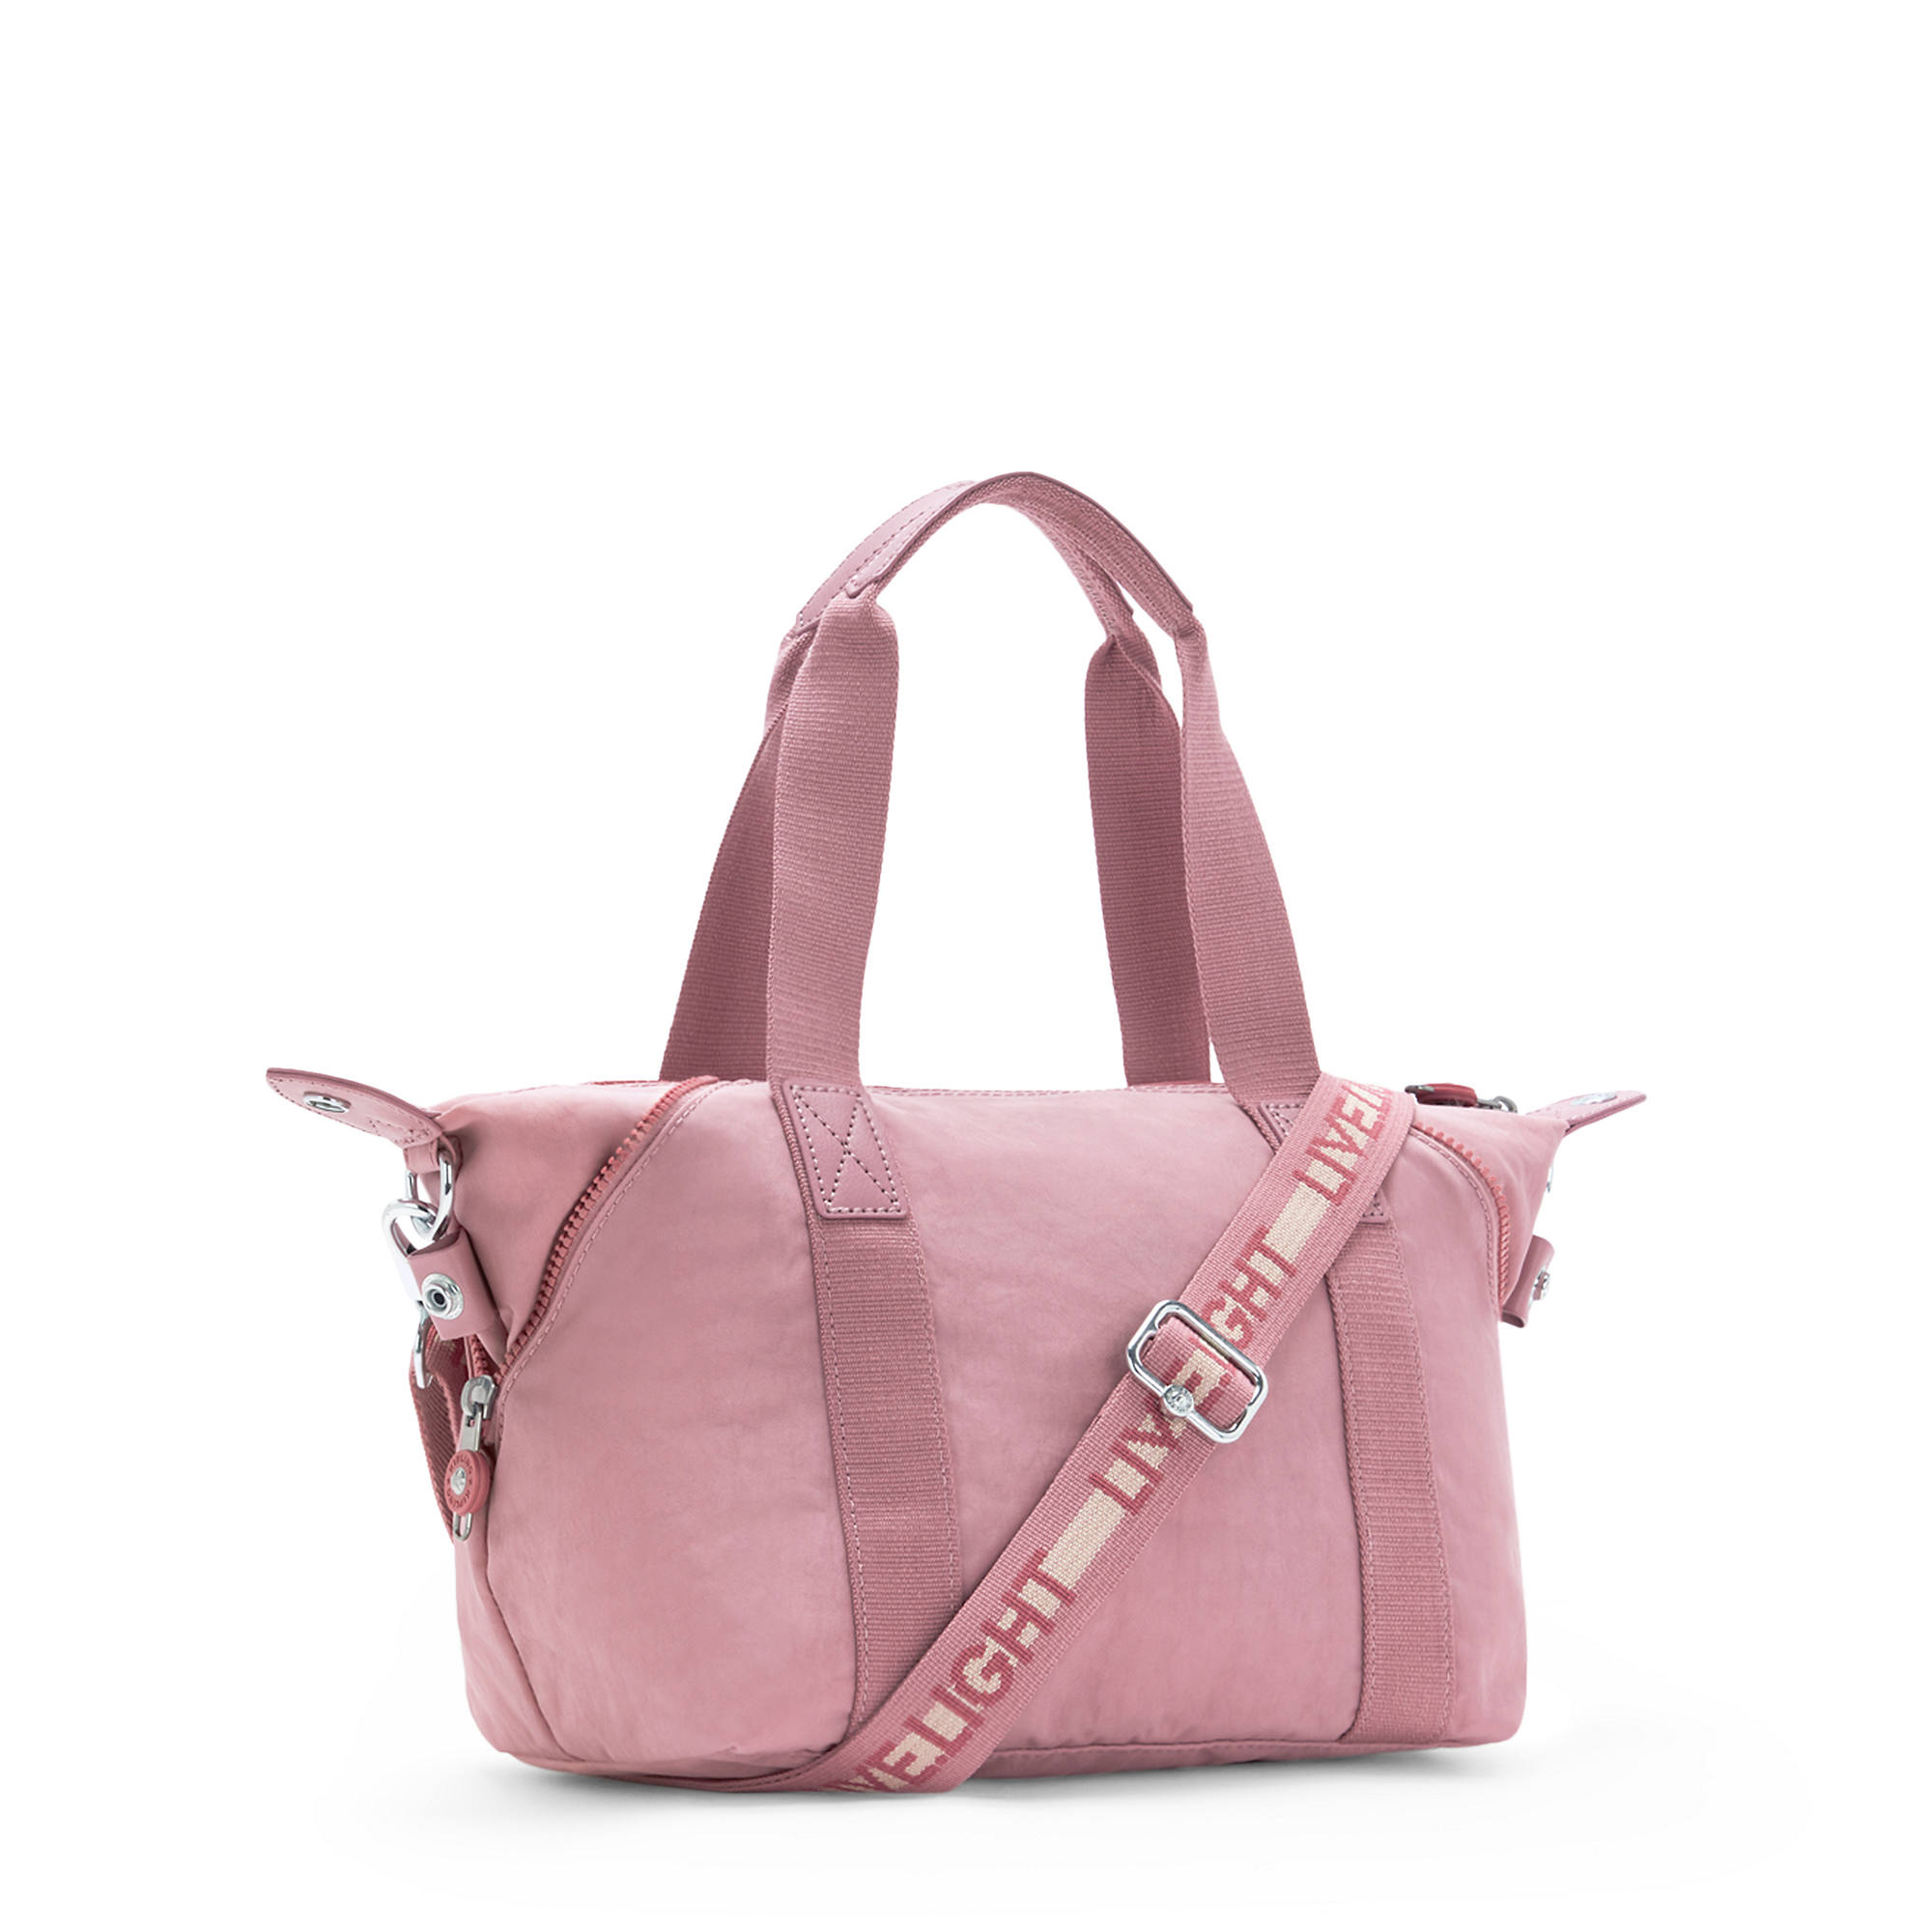 TINBERON Handbag Accessories 62cm Short Shoulder Bag Strap Women